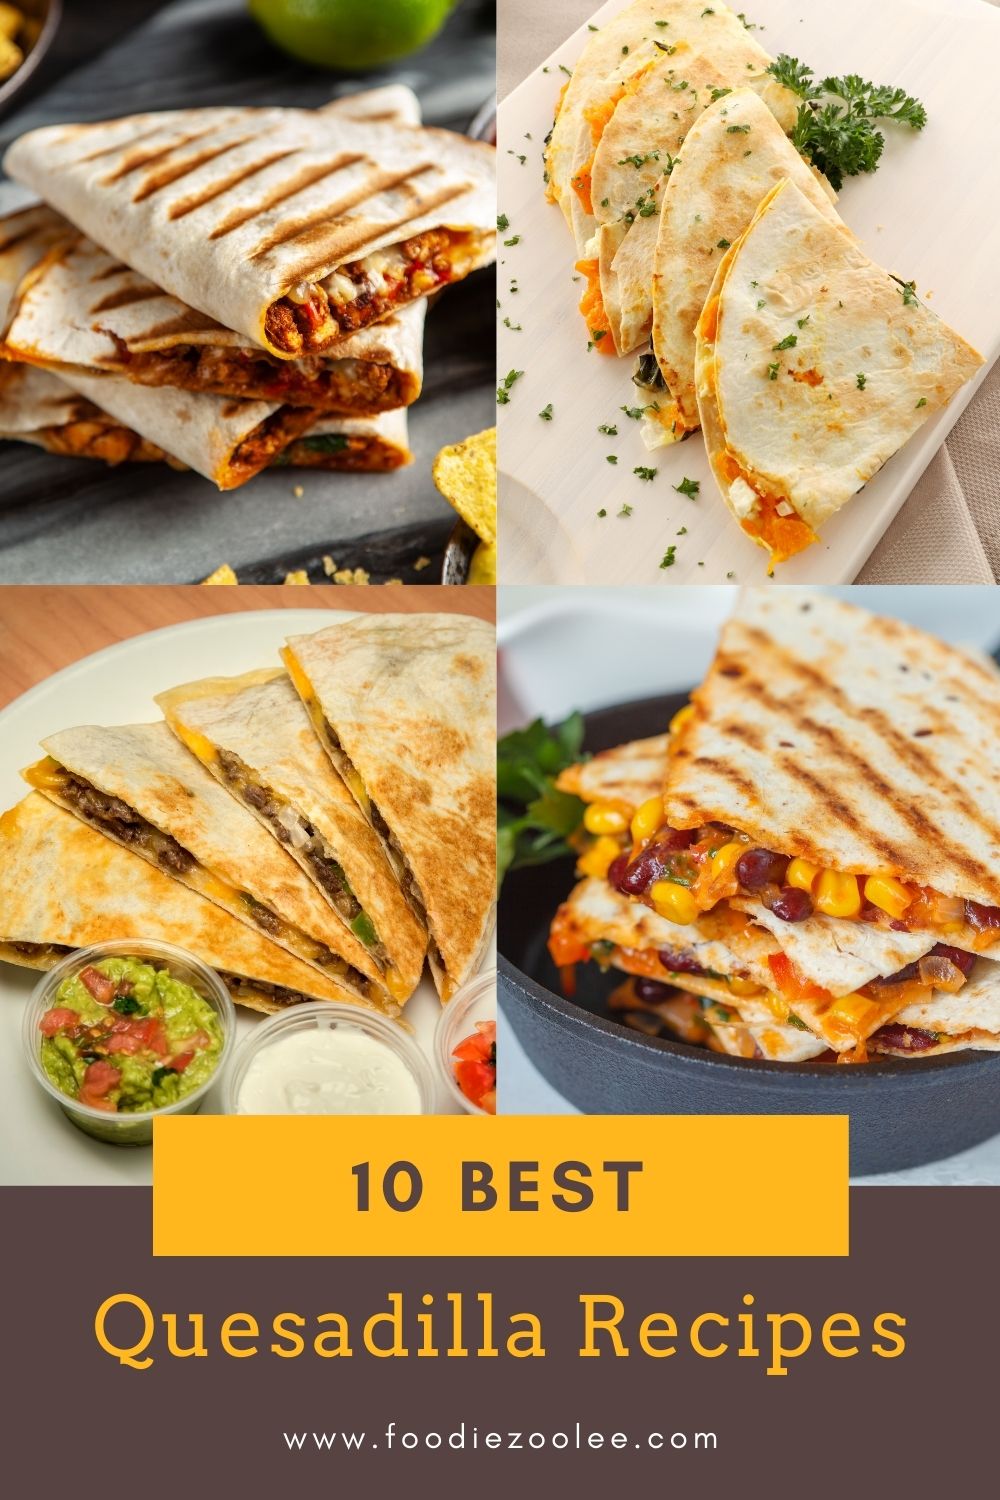 10 Quesadilla Recipes for National Quesadilla Day FoodieZoolee